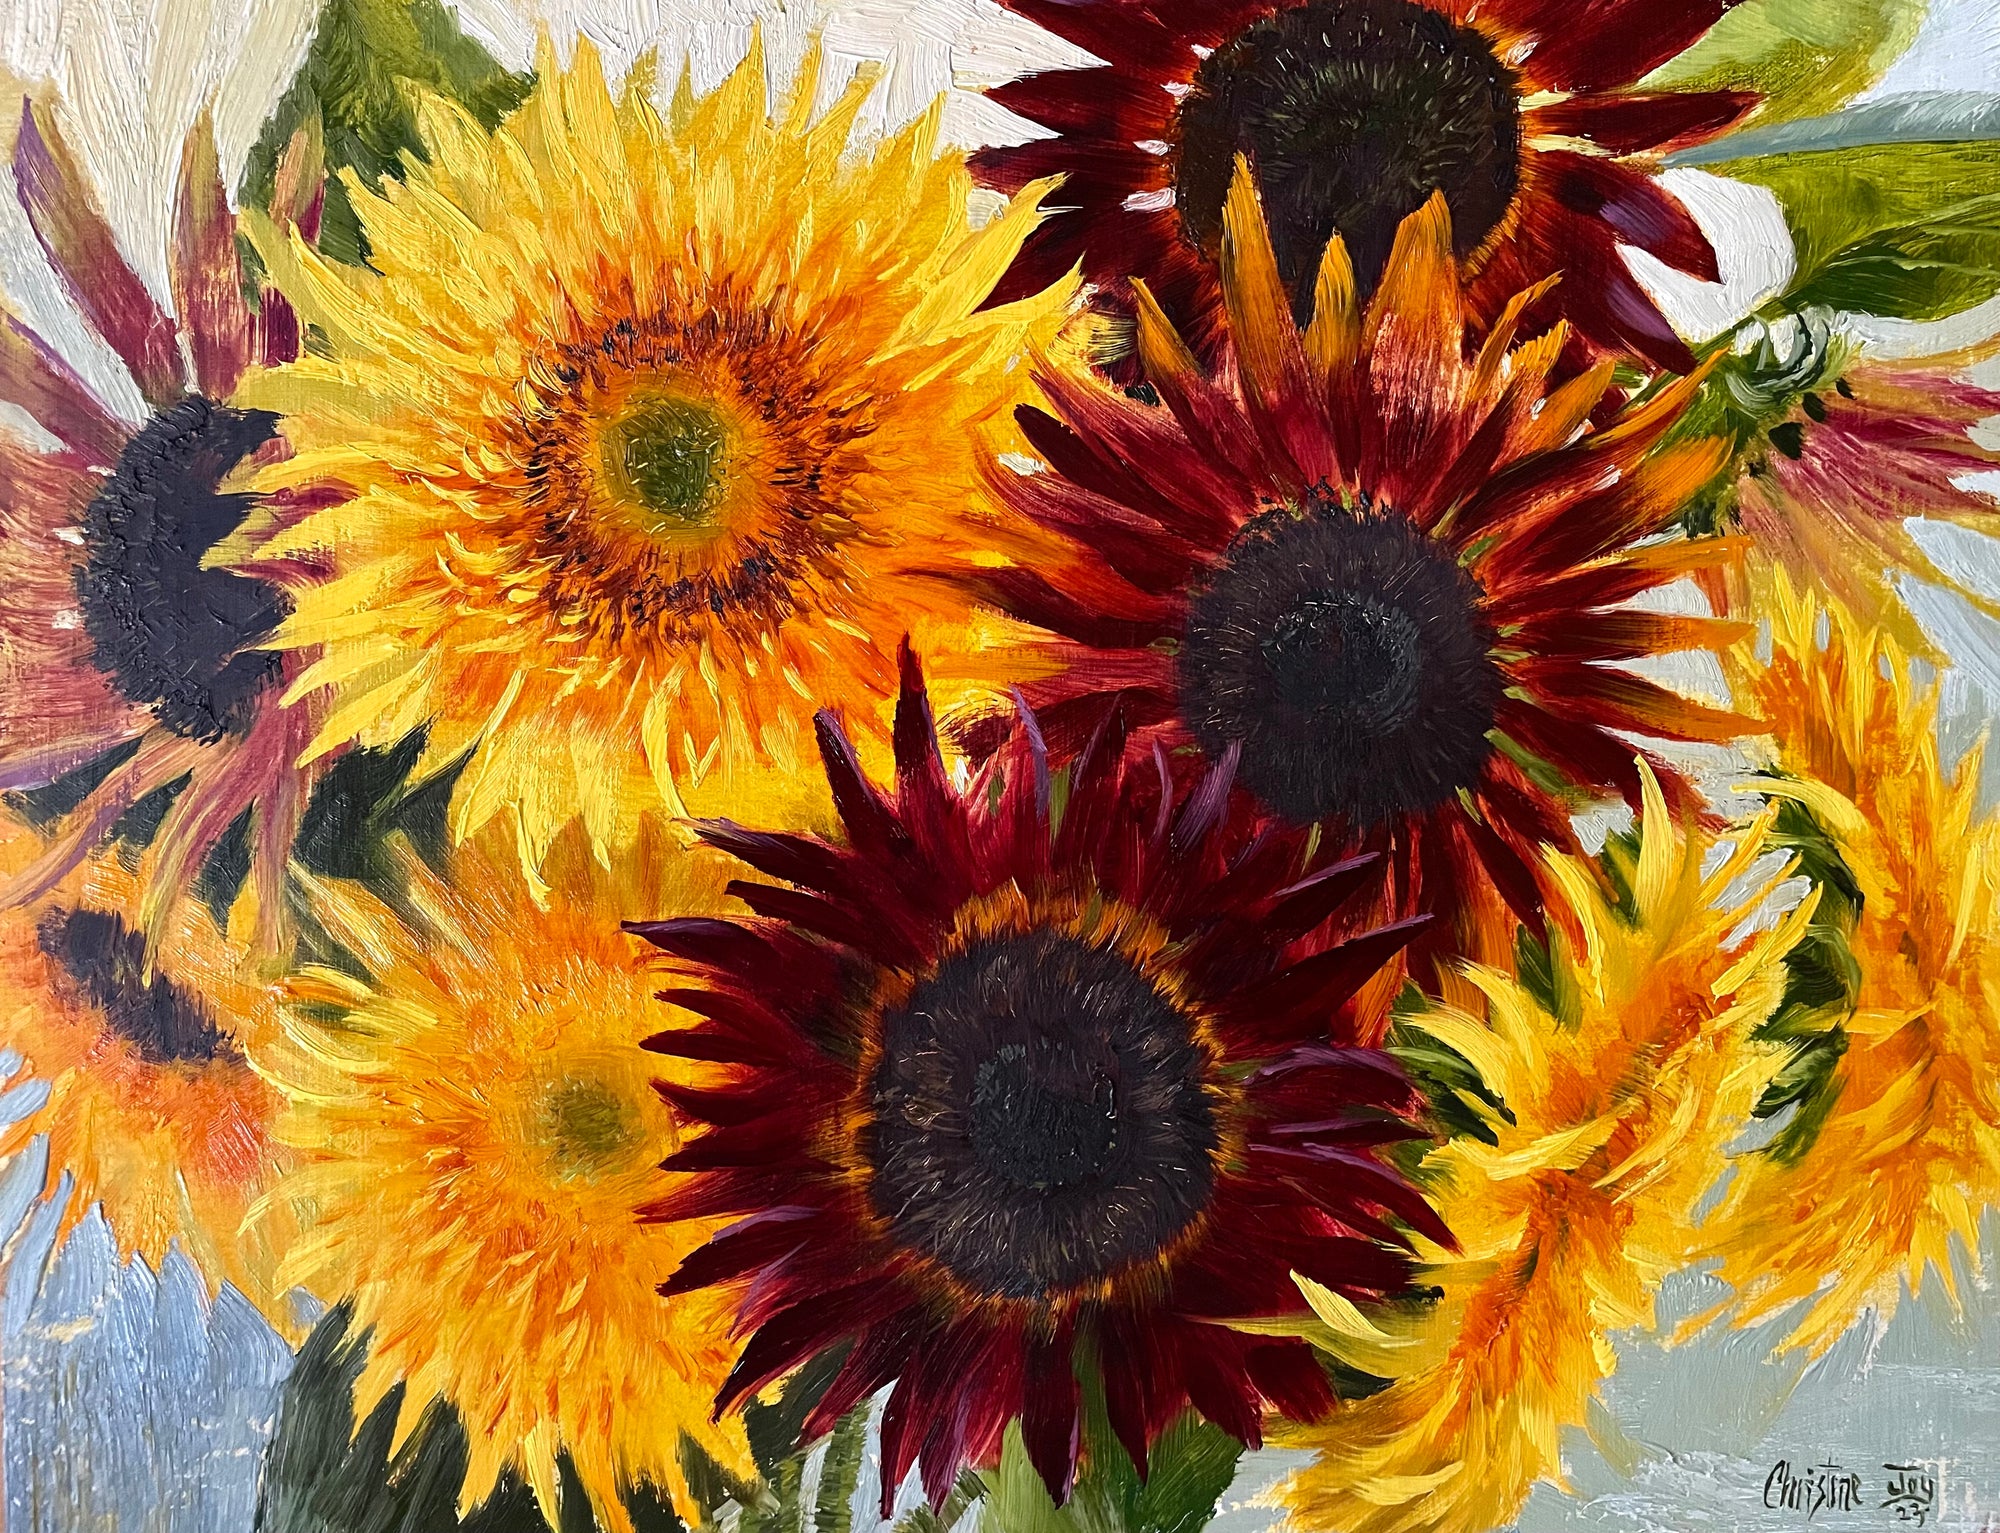 An Array of Sunflowers